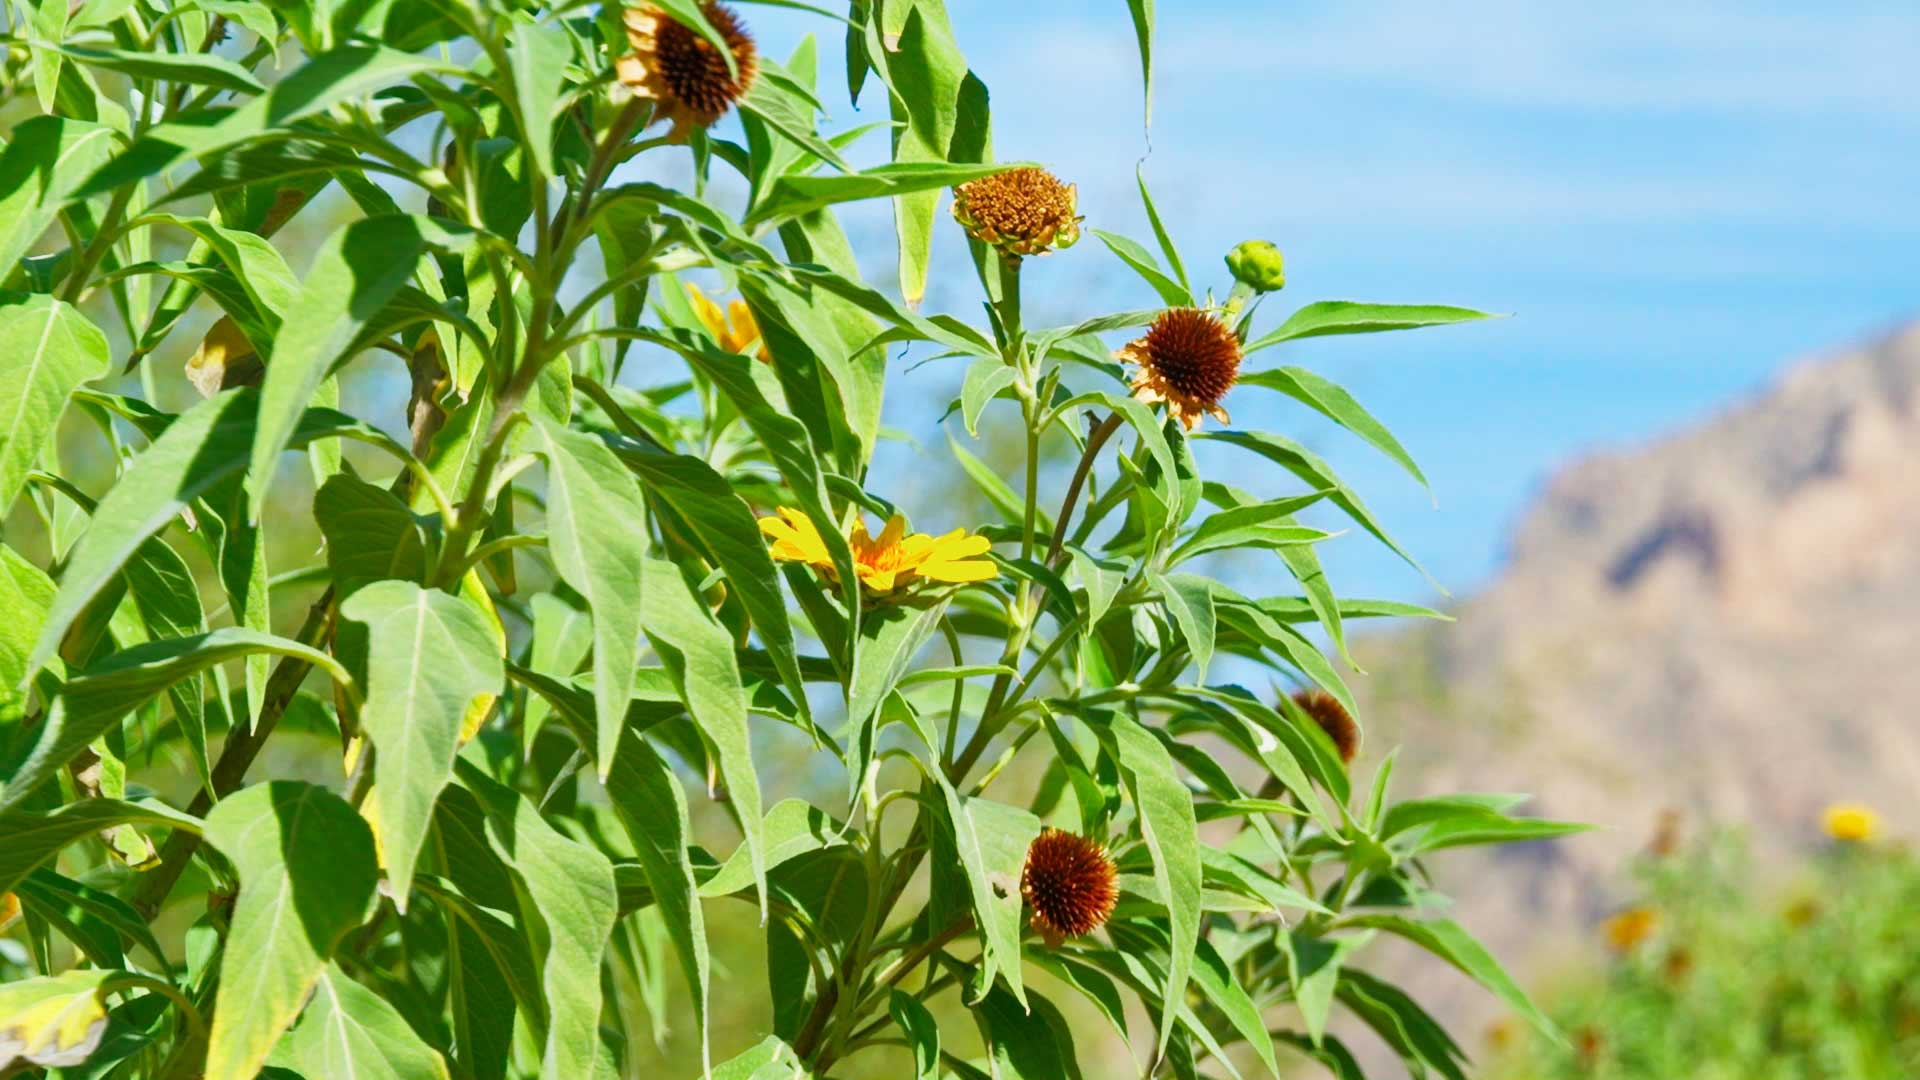 Desert Plants: The Mexican Sunflower Tree